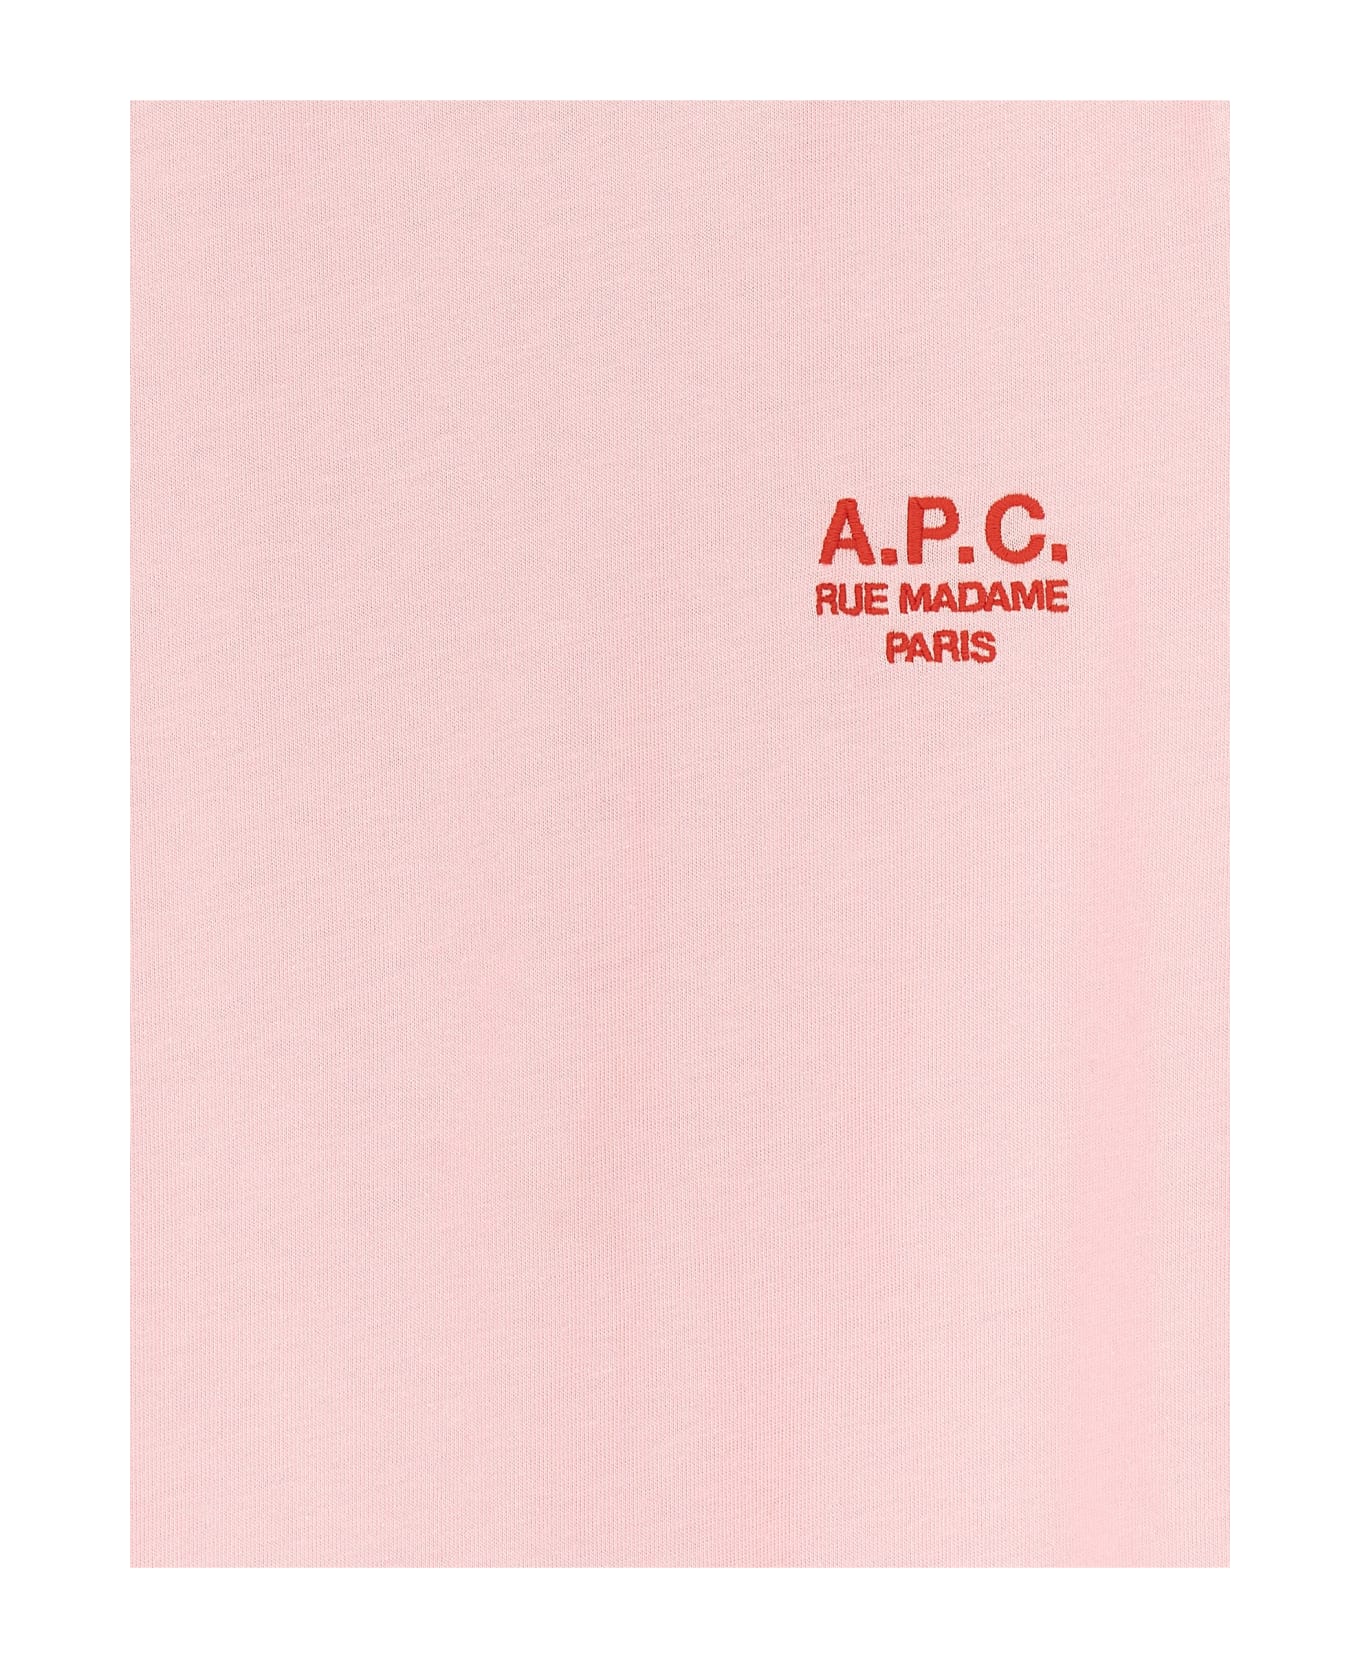 A.P.C. Logo Printed Crewneck T-shirt - Tfe Rose Rouge